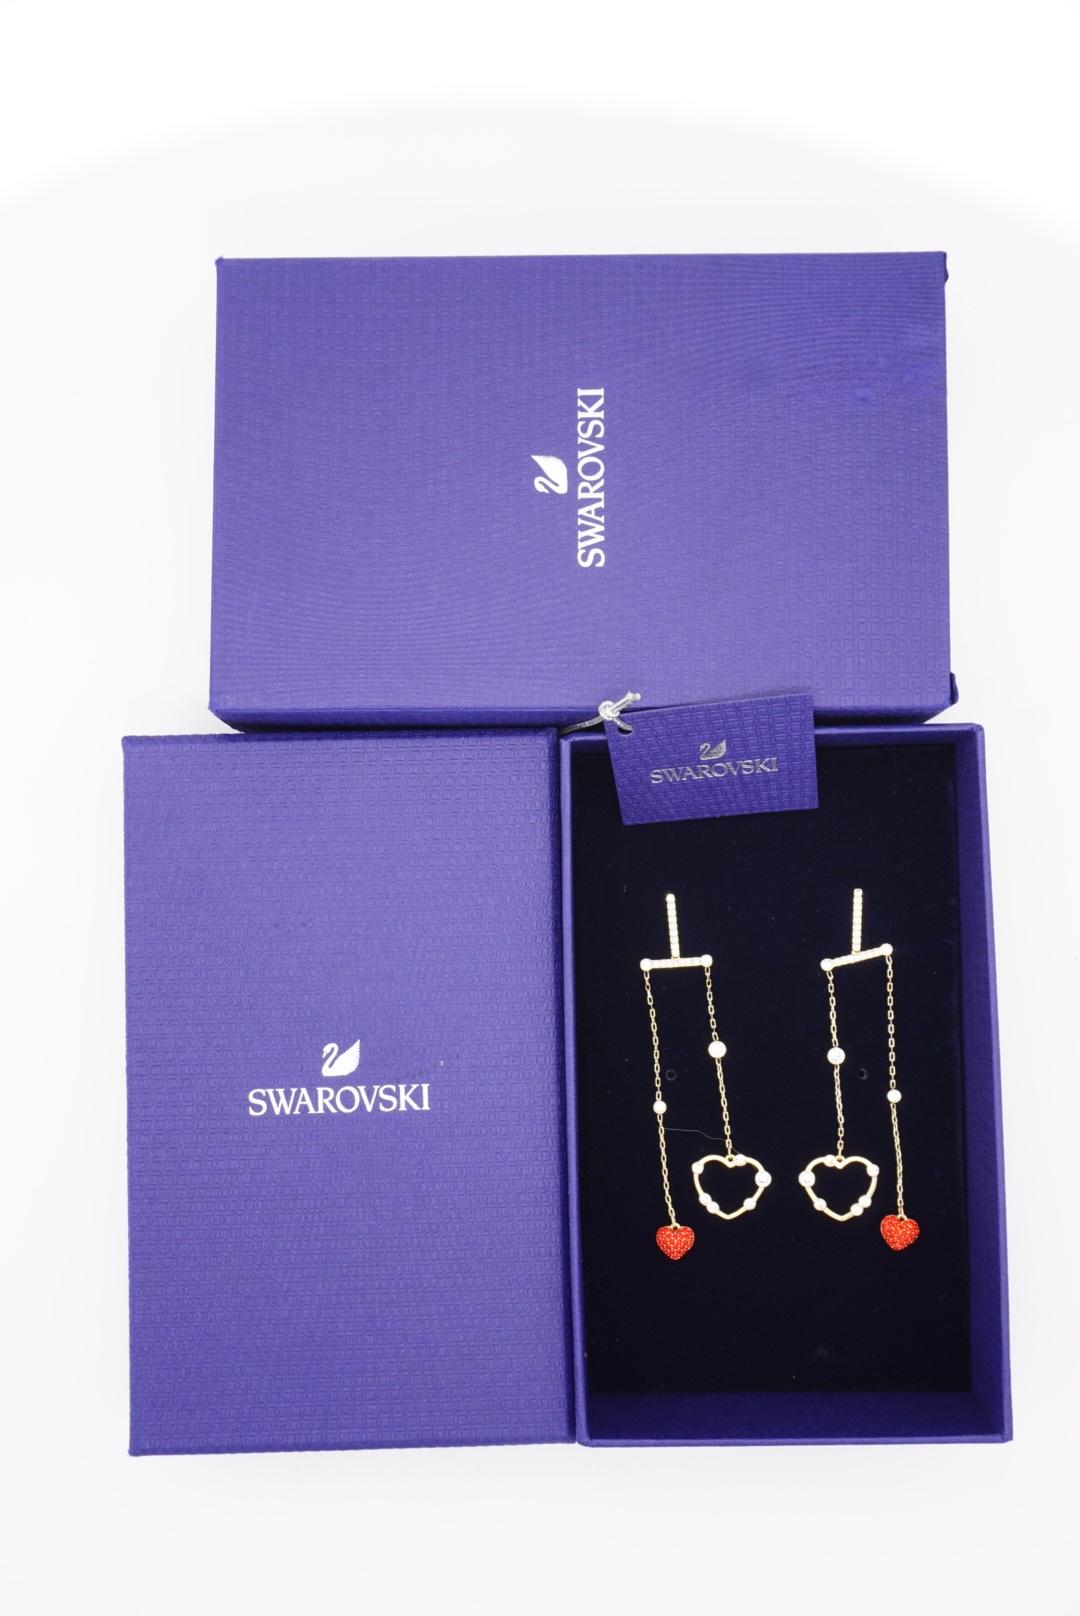 Swarovski OXO Boucles d'oreilles en goutte avec pendentif mobile en forme de cœur en or percé, BNWT en vente 2